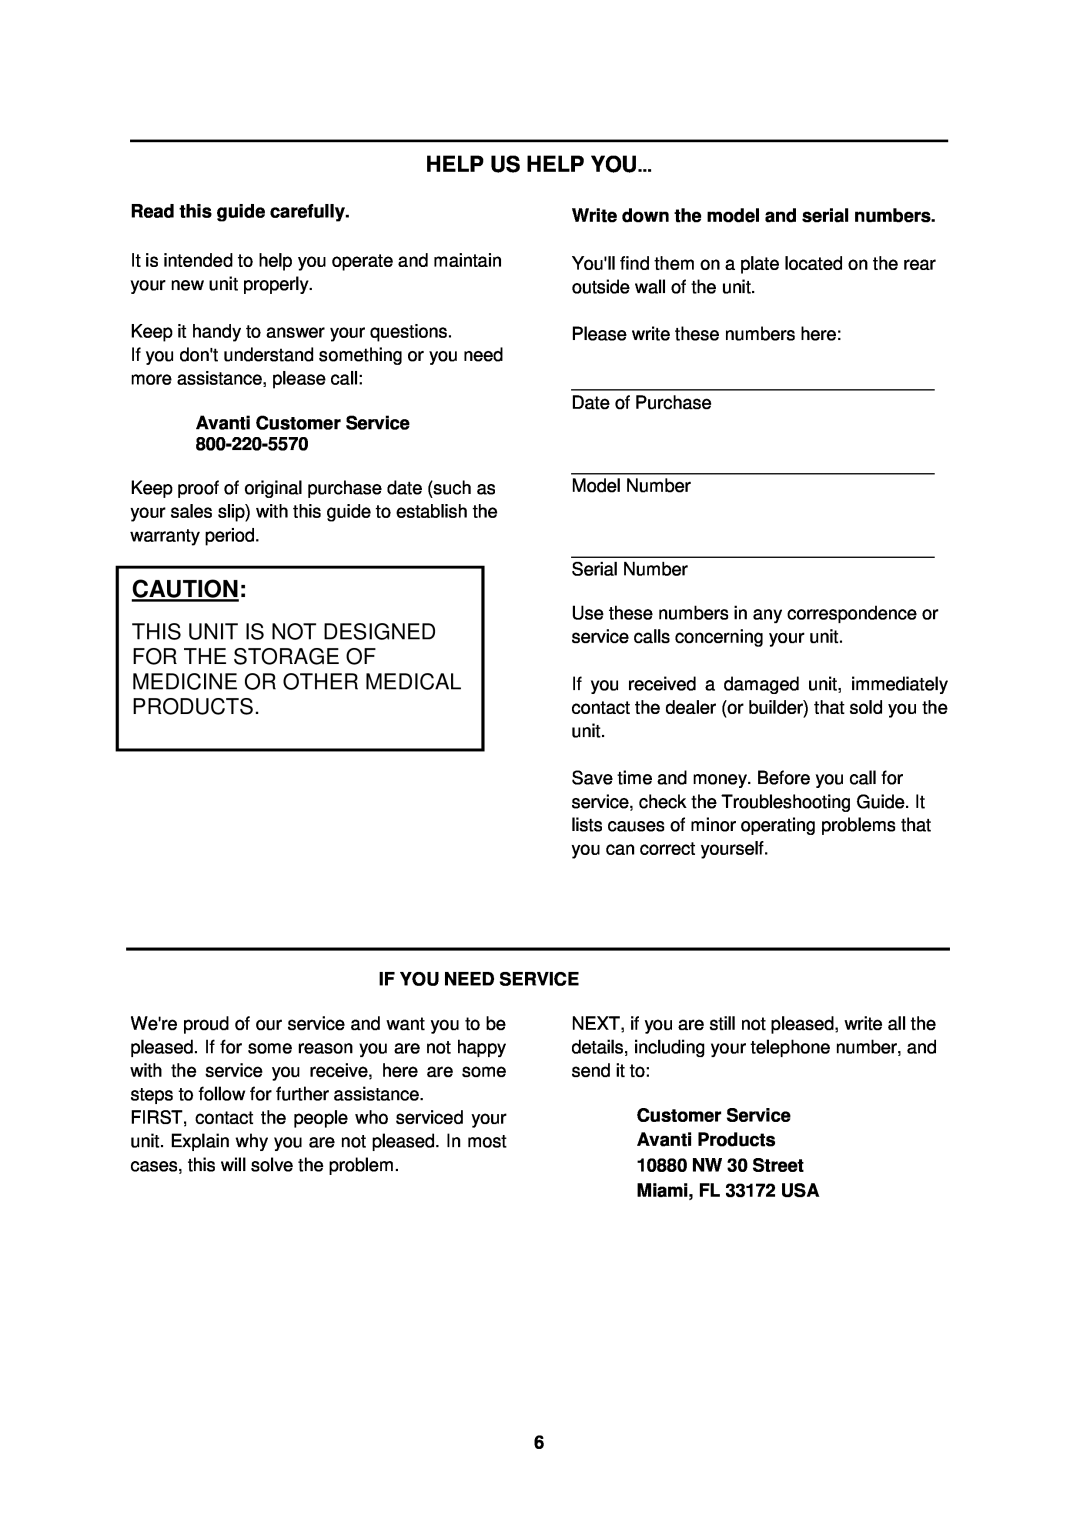 Avanti AR4586B instruction manual Help Us Help You, Read this guide carefully, Avanti Customer Service, If You Need Service 